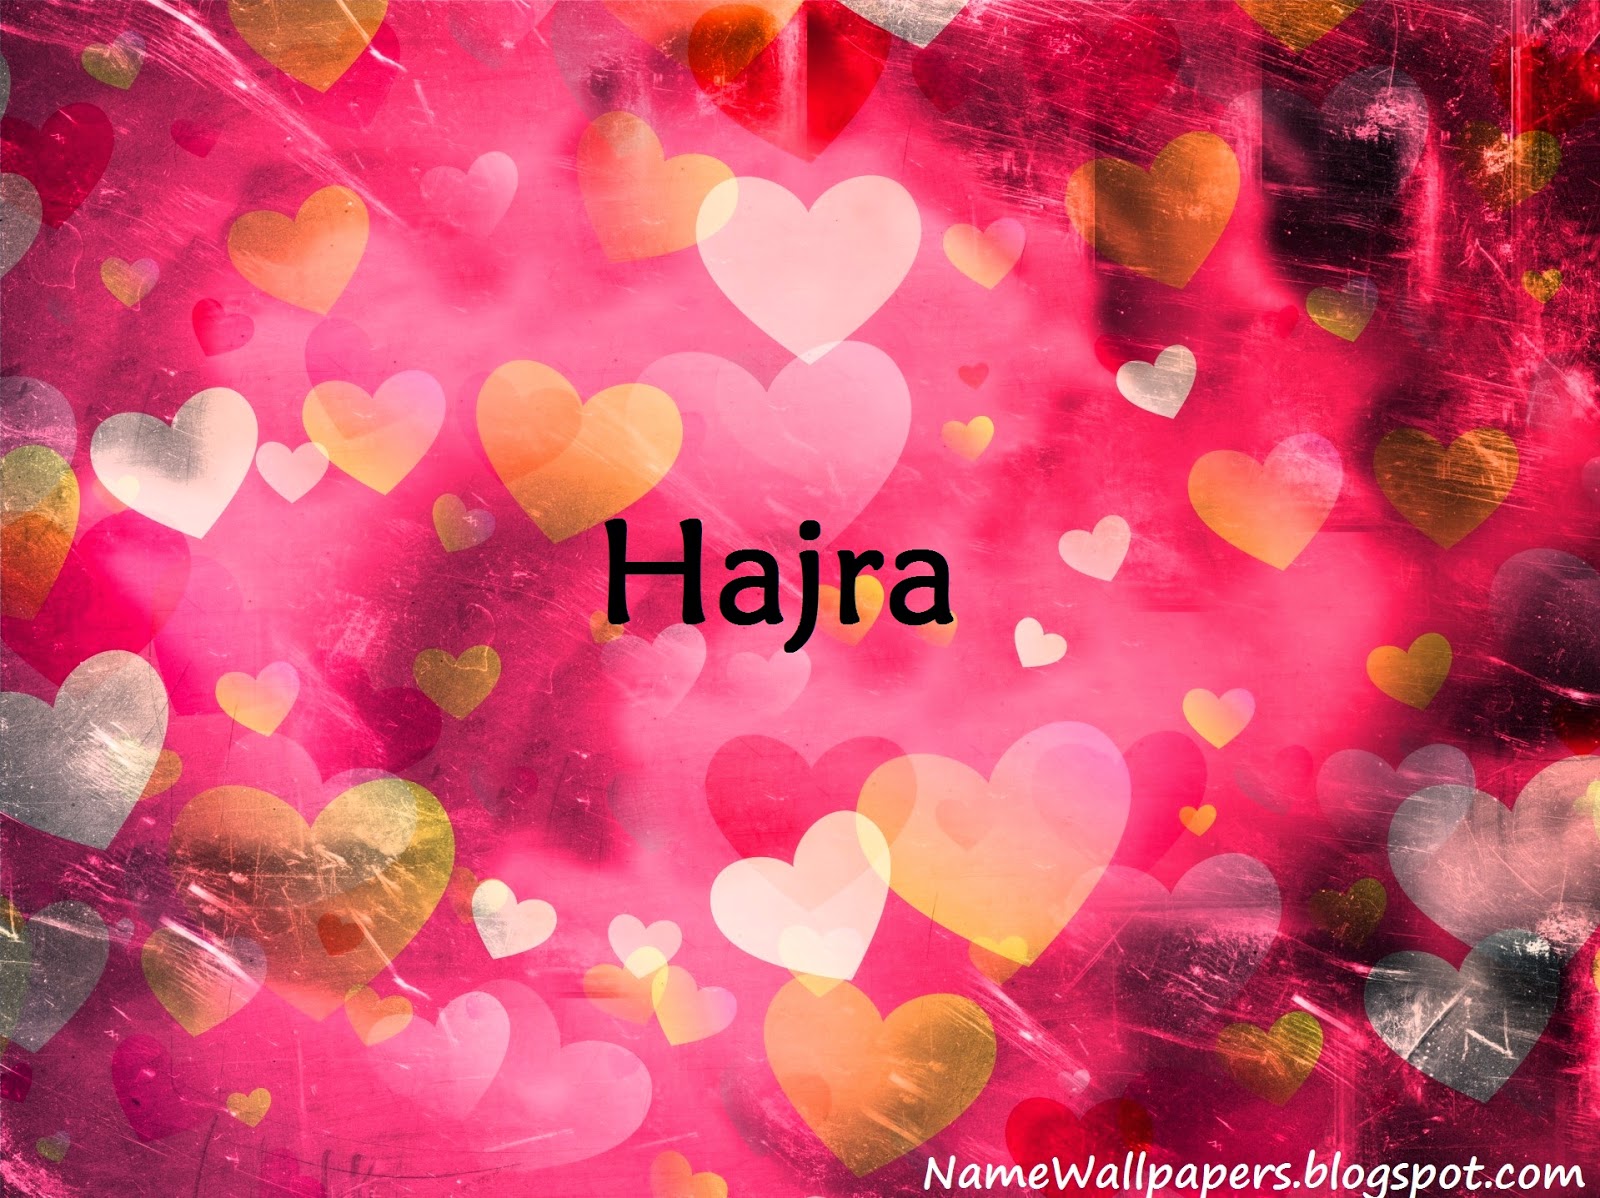 hajra name wallpaper,heart,pink,valentine's day,love,magenta